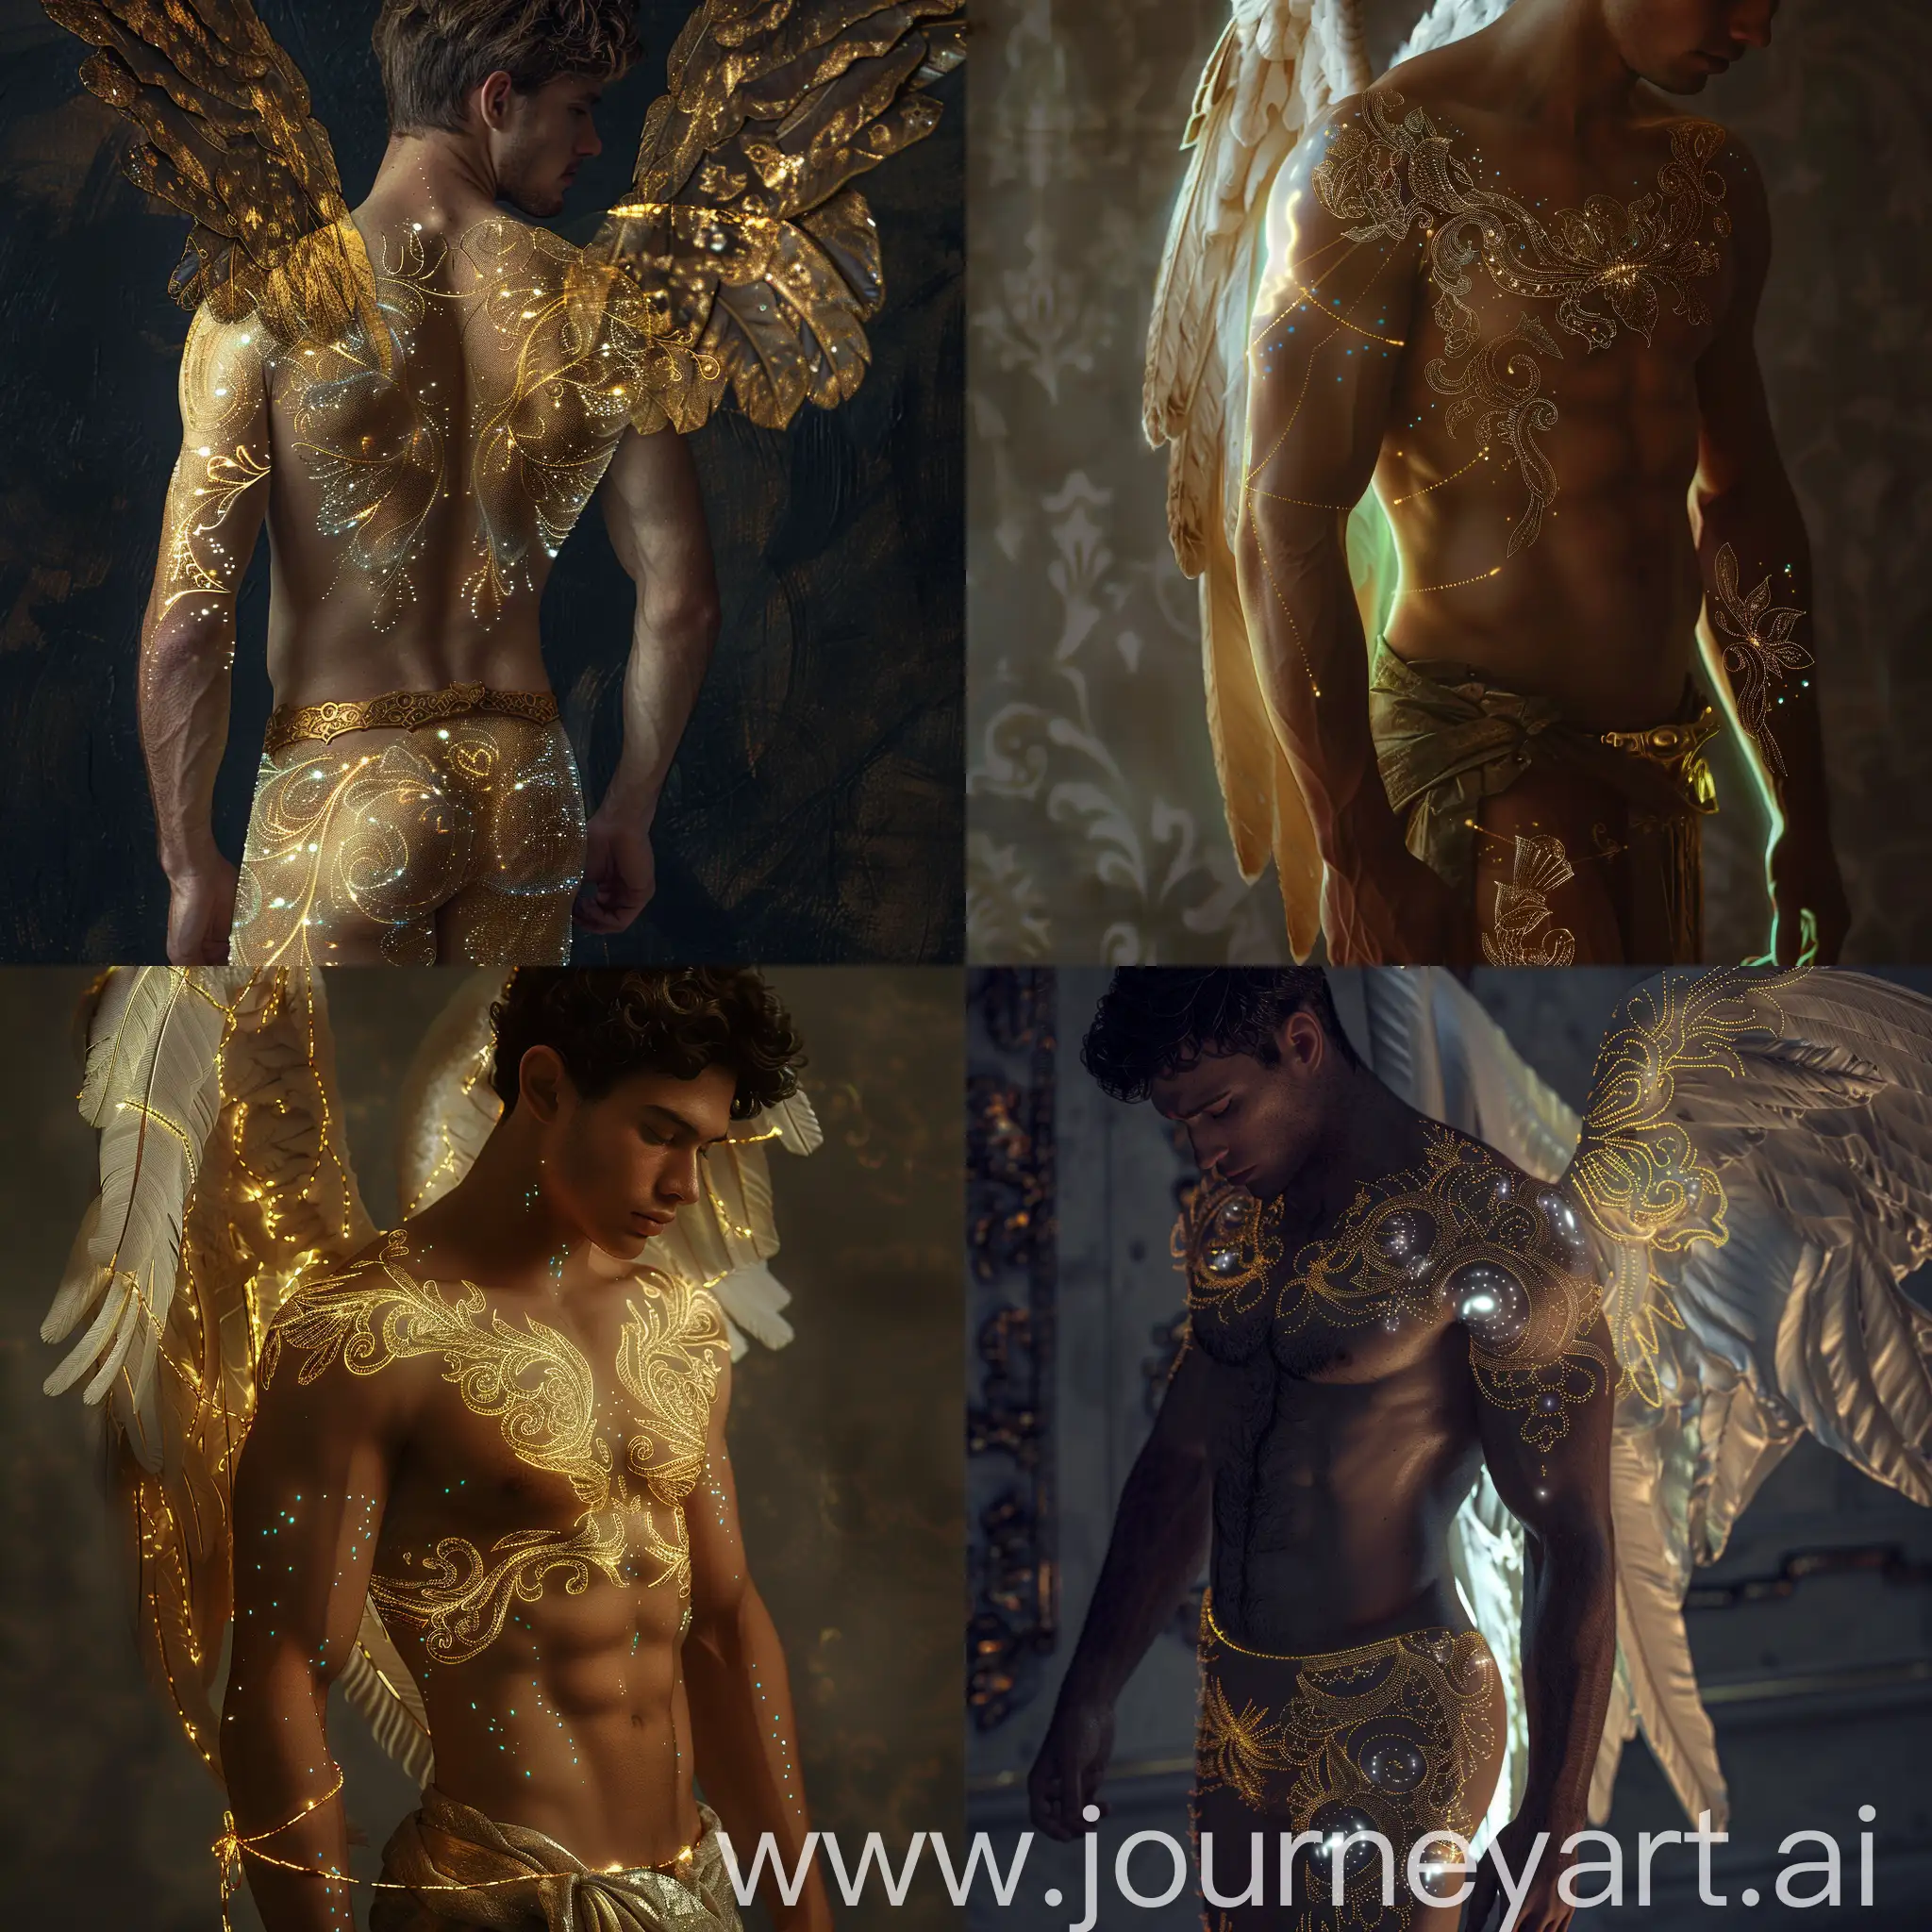 male arch angel, loincloth, male perfection, gold filigree ornamentation, bioluminescent filigree pattern on skin, minimal.